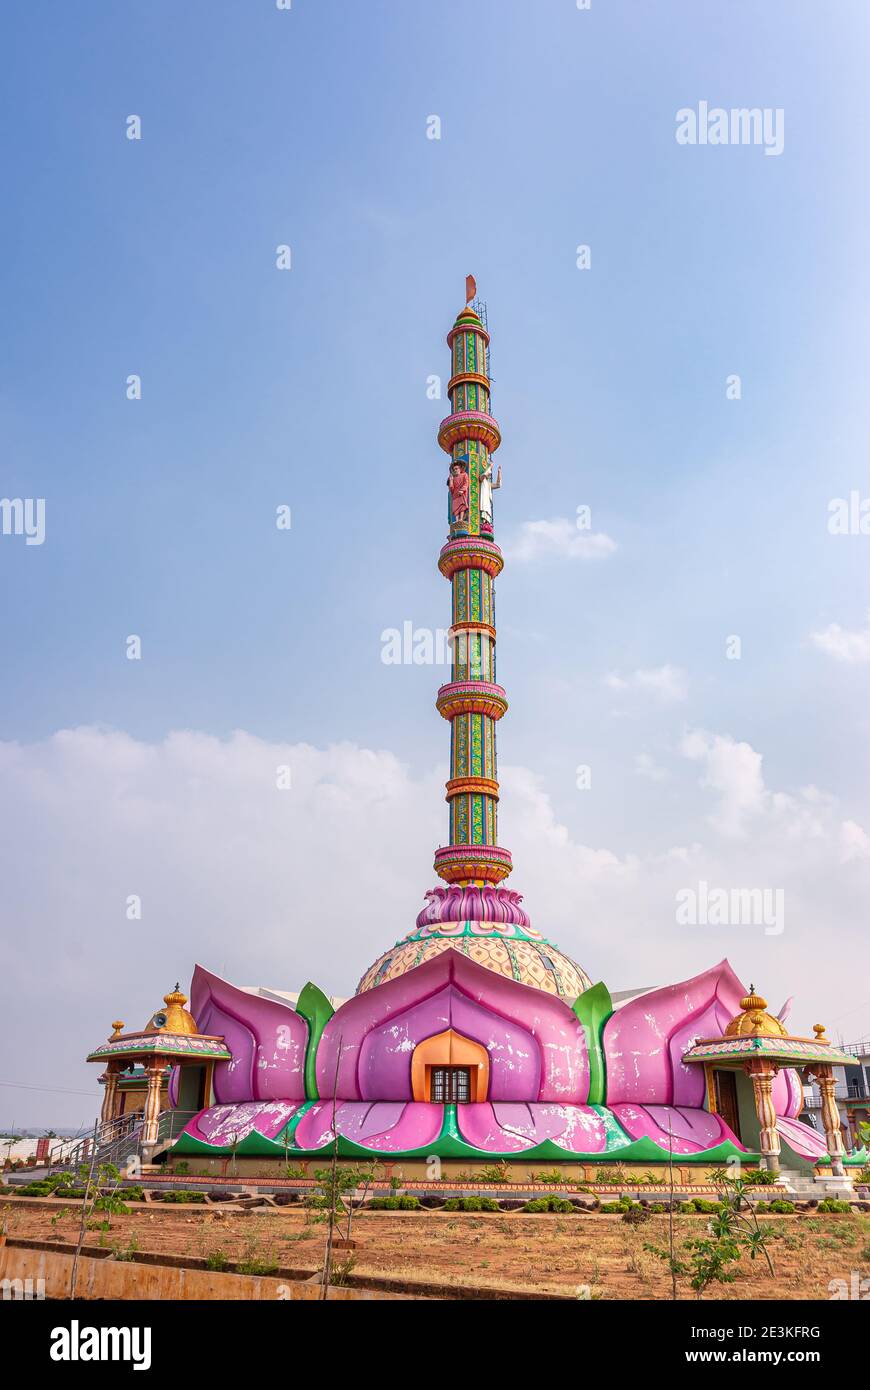 Hampi, Karnataka, India - November 5, 2013: Shree Shirdi Saibaba Sevashram spectacular and colorful building with slender tall tower reaching into blu Stock Photo